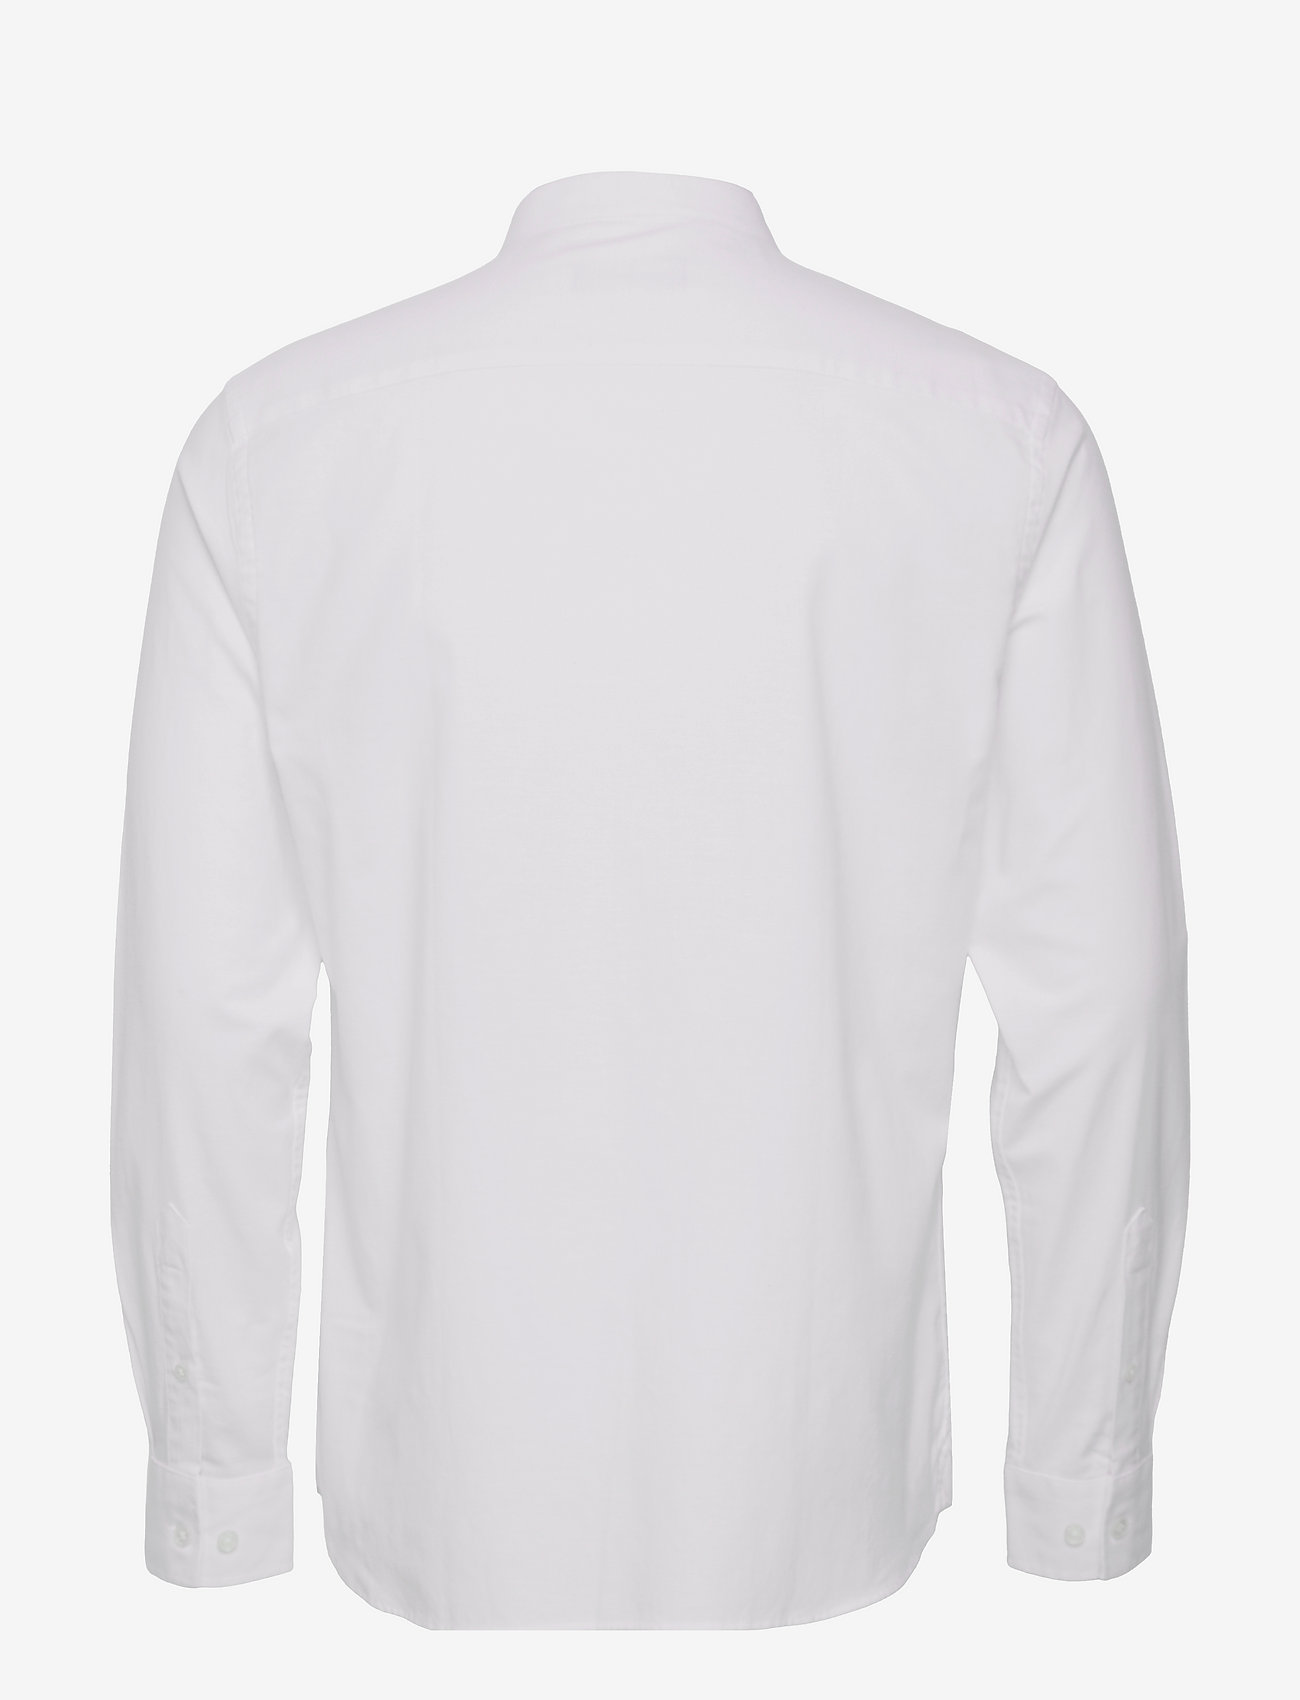 Clean Cut Copenhagen - Oxford Mao Stretch L/S - oxford shirts - white - 1